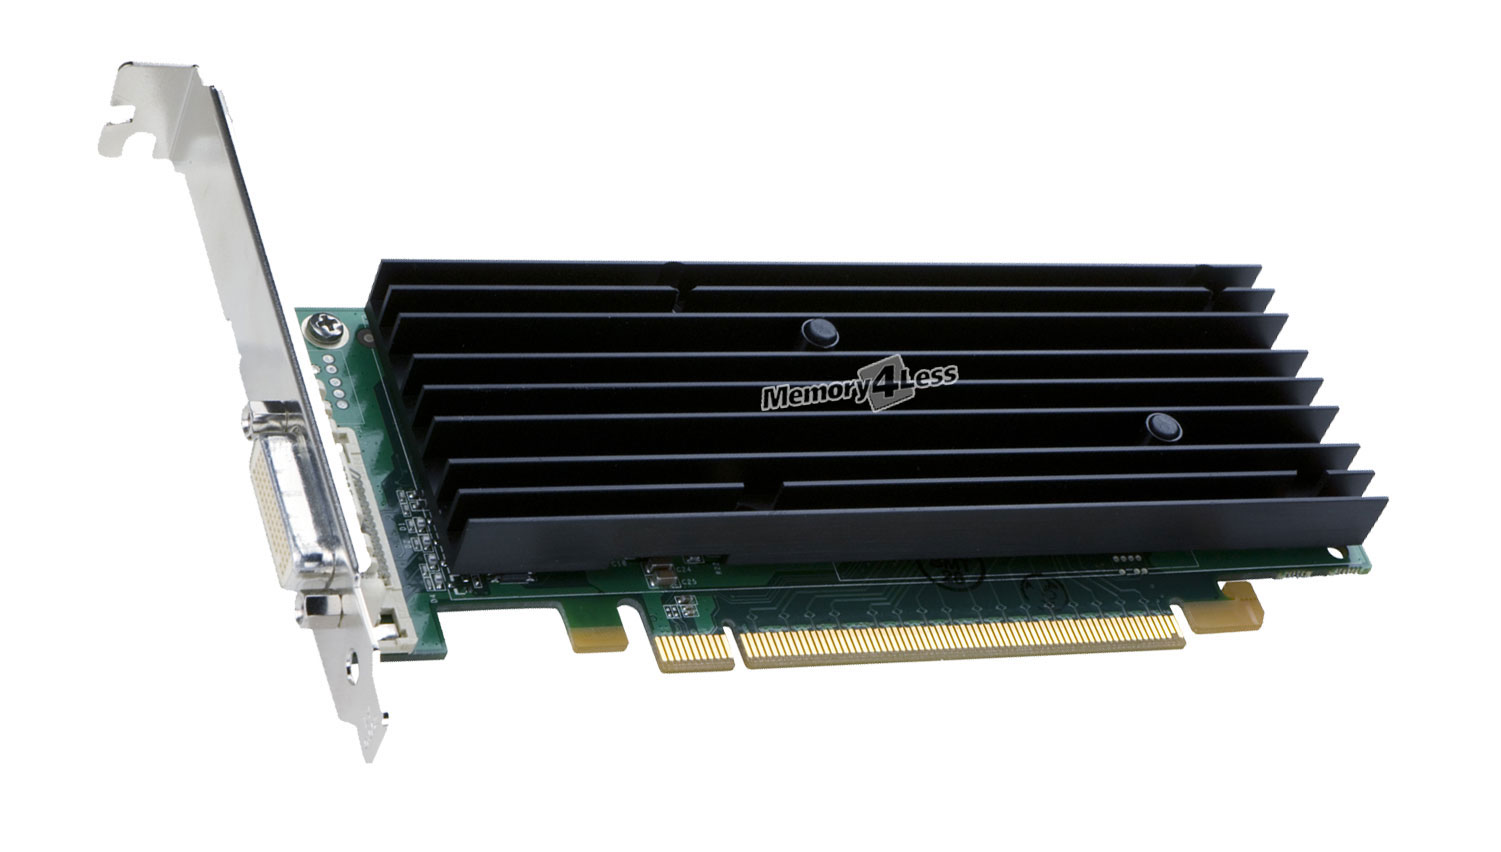 KP453AVR HP Nvidia Quadro NVS290 PCI-Express x16 256MB 400MHz Low Profile Video Graphics Card